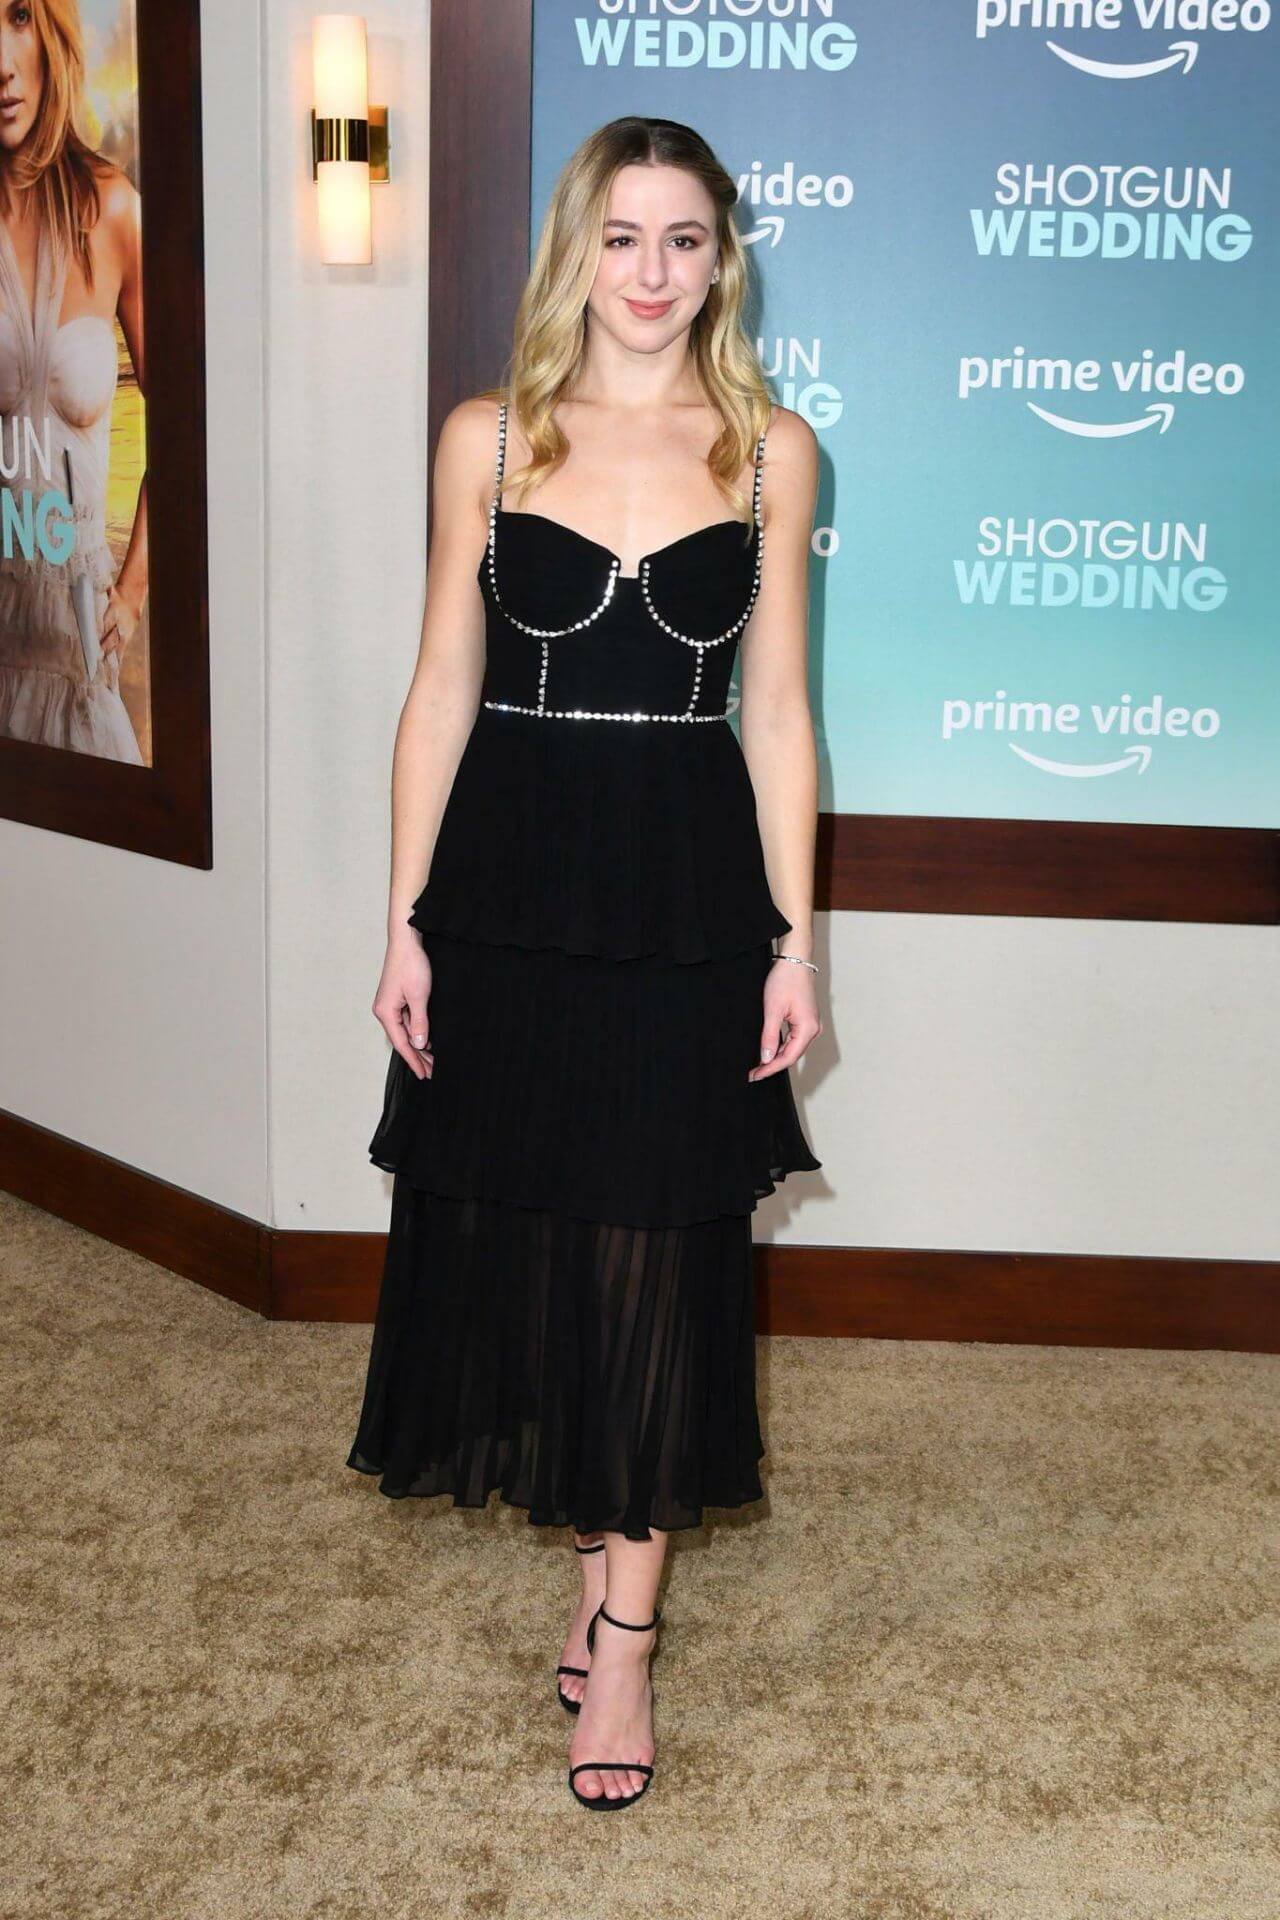 Chloe Lukasiak  In Black Strap Sleeves Long Ruffle Dress At “Shotgun Wedding” Premiere in Hollywood